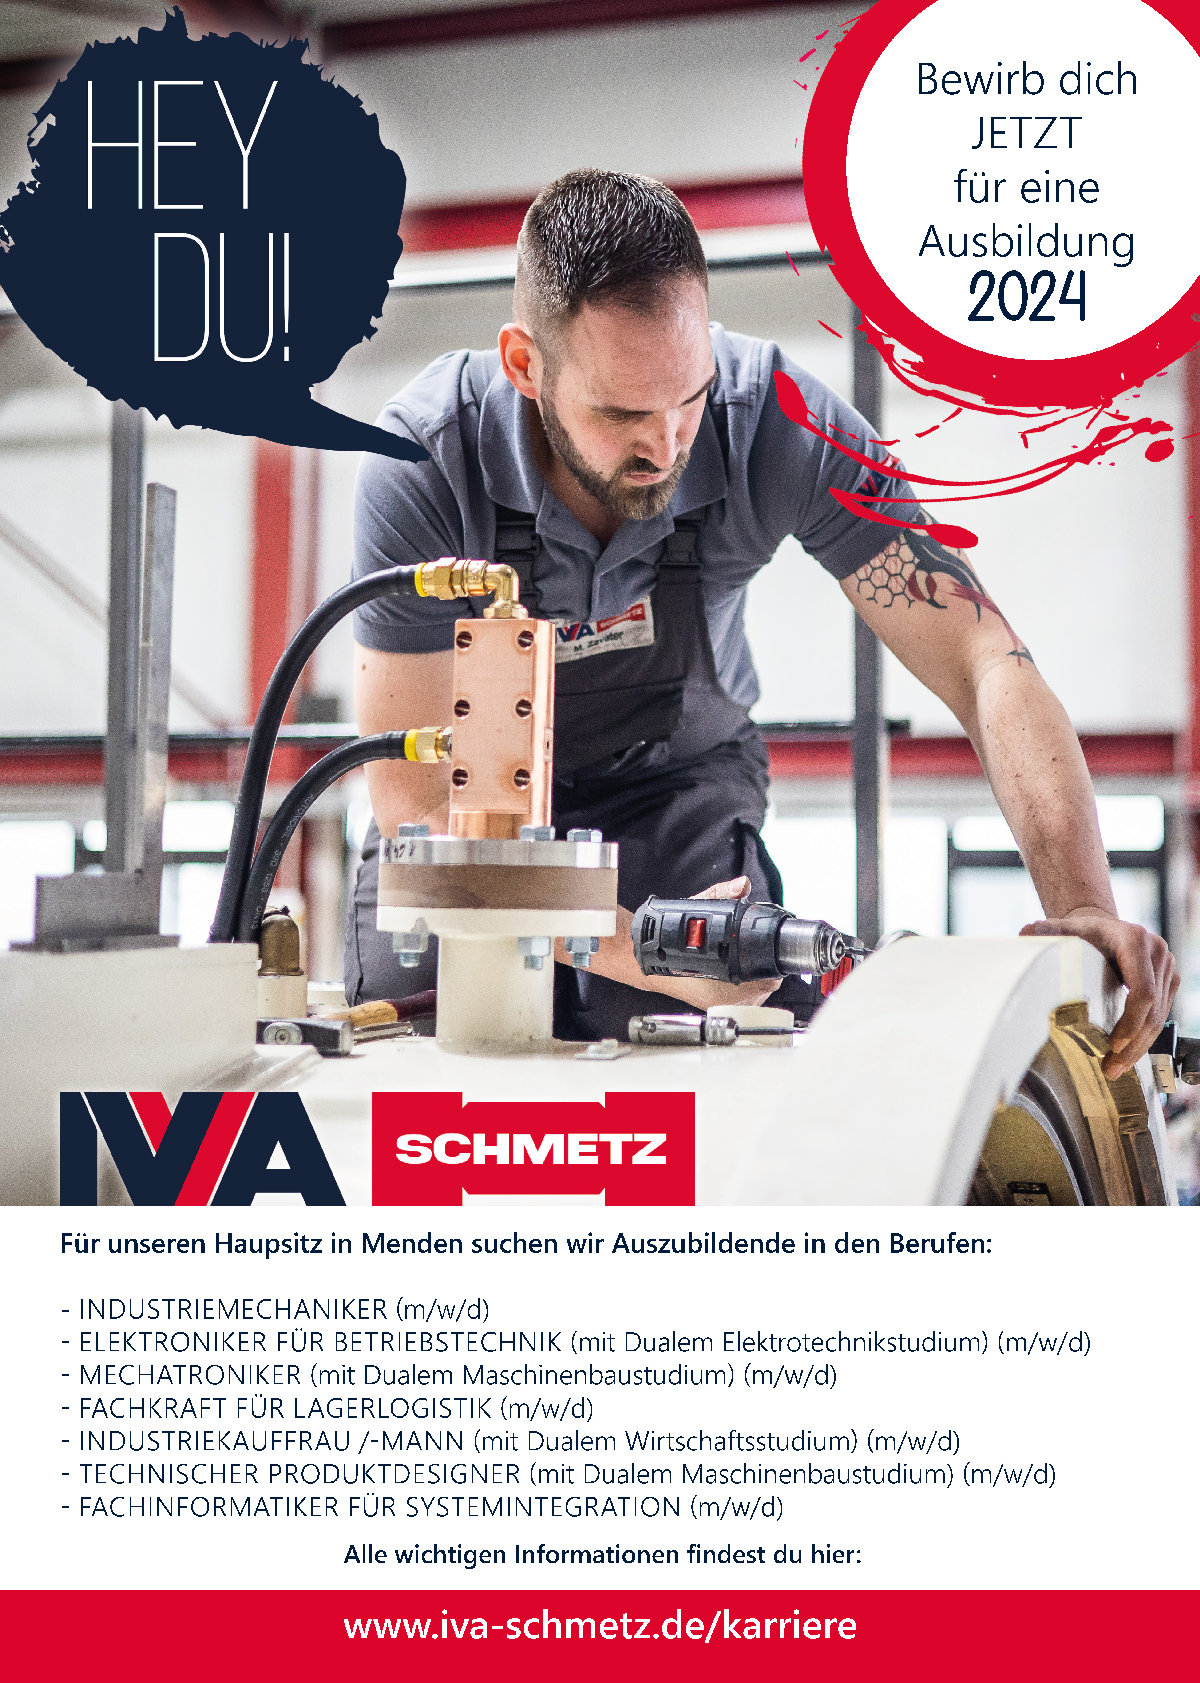 IVA Schmetz GmbH